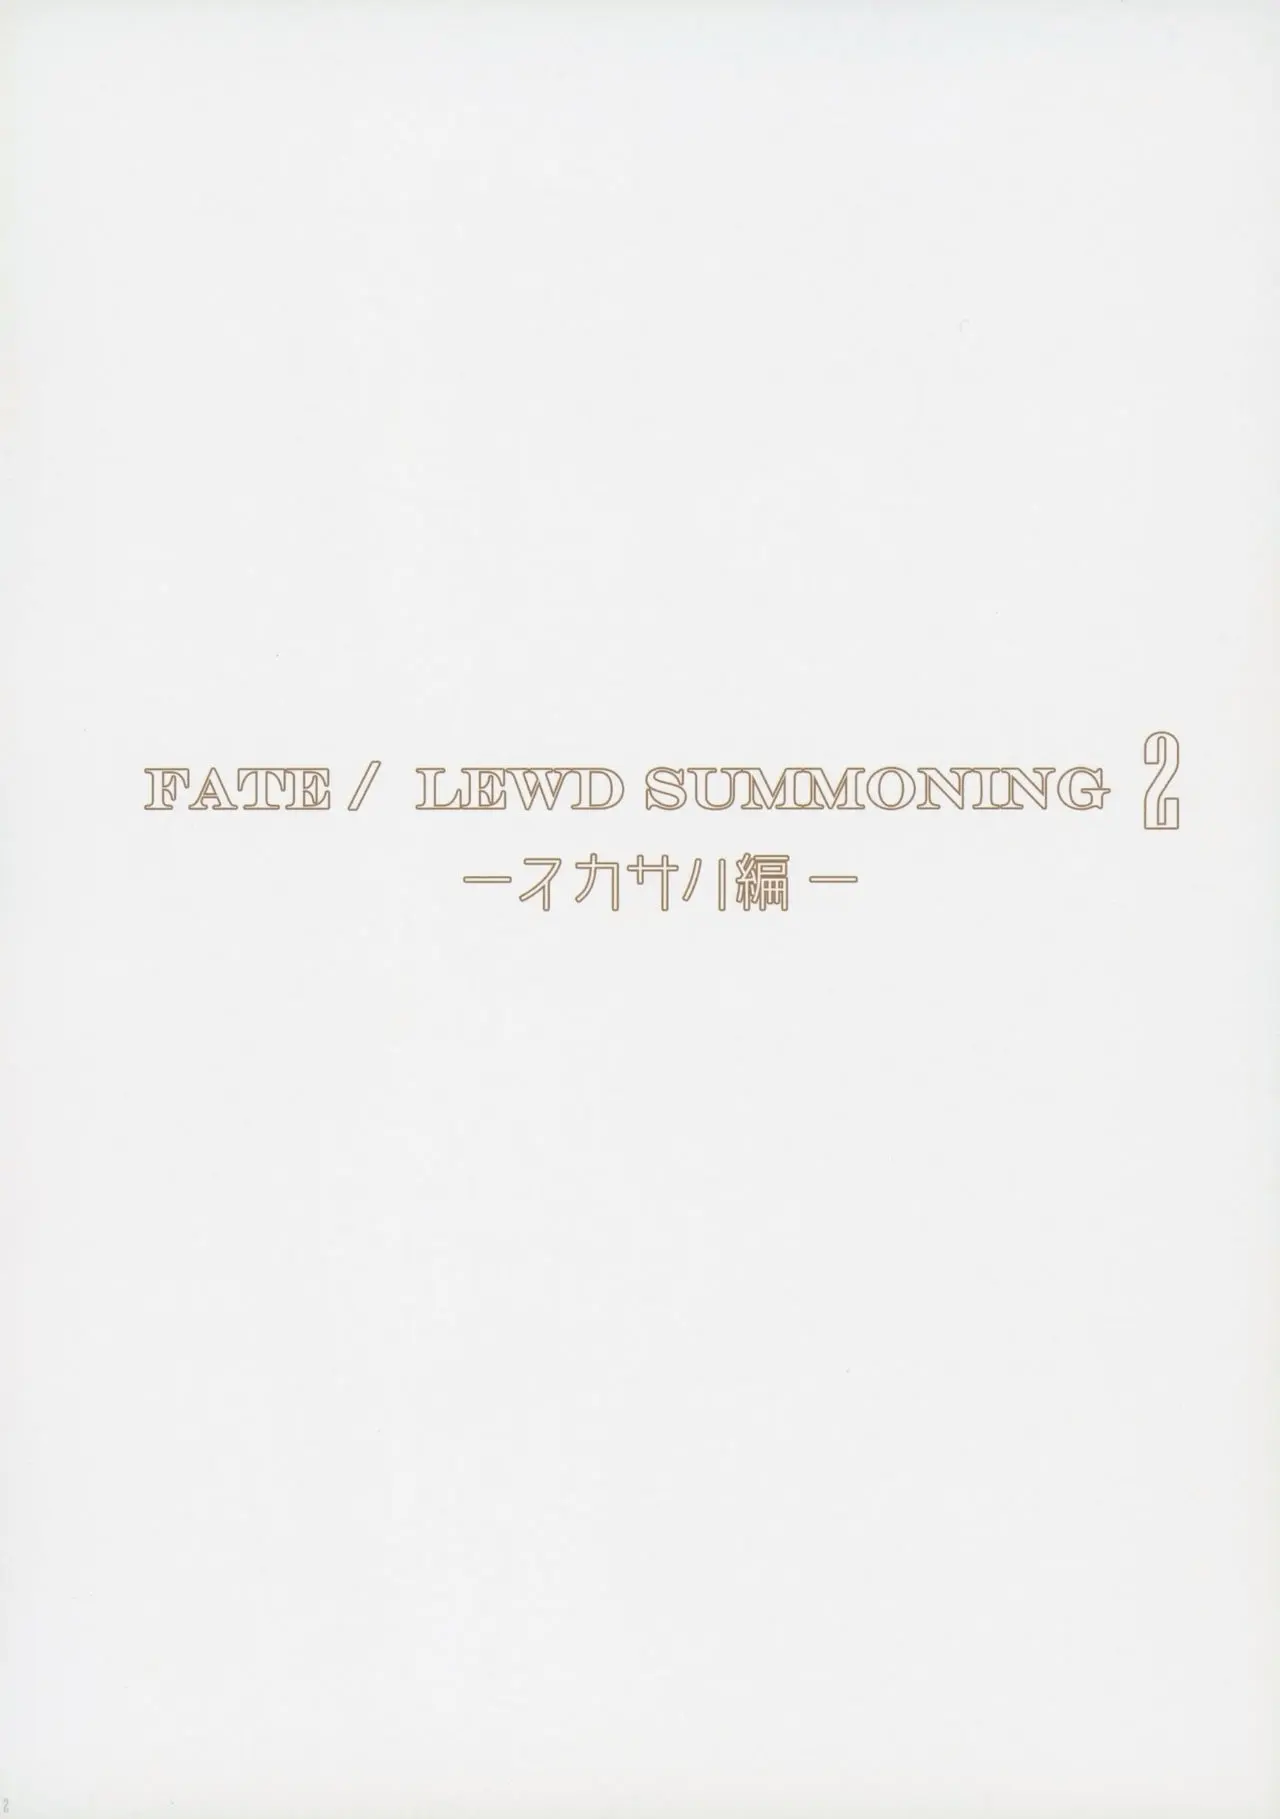 Fate/Lewd Summoning 2